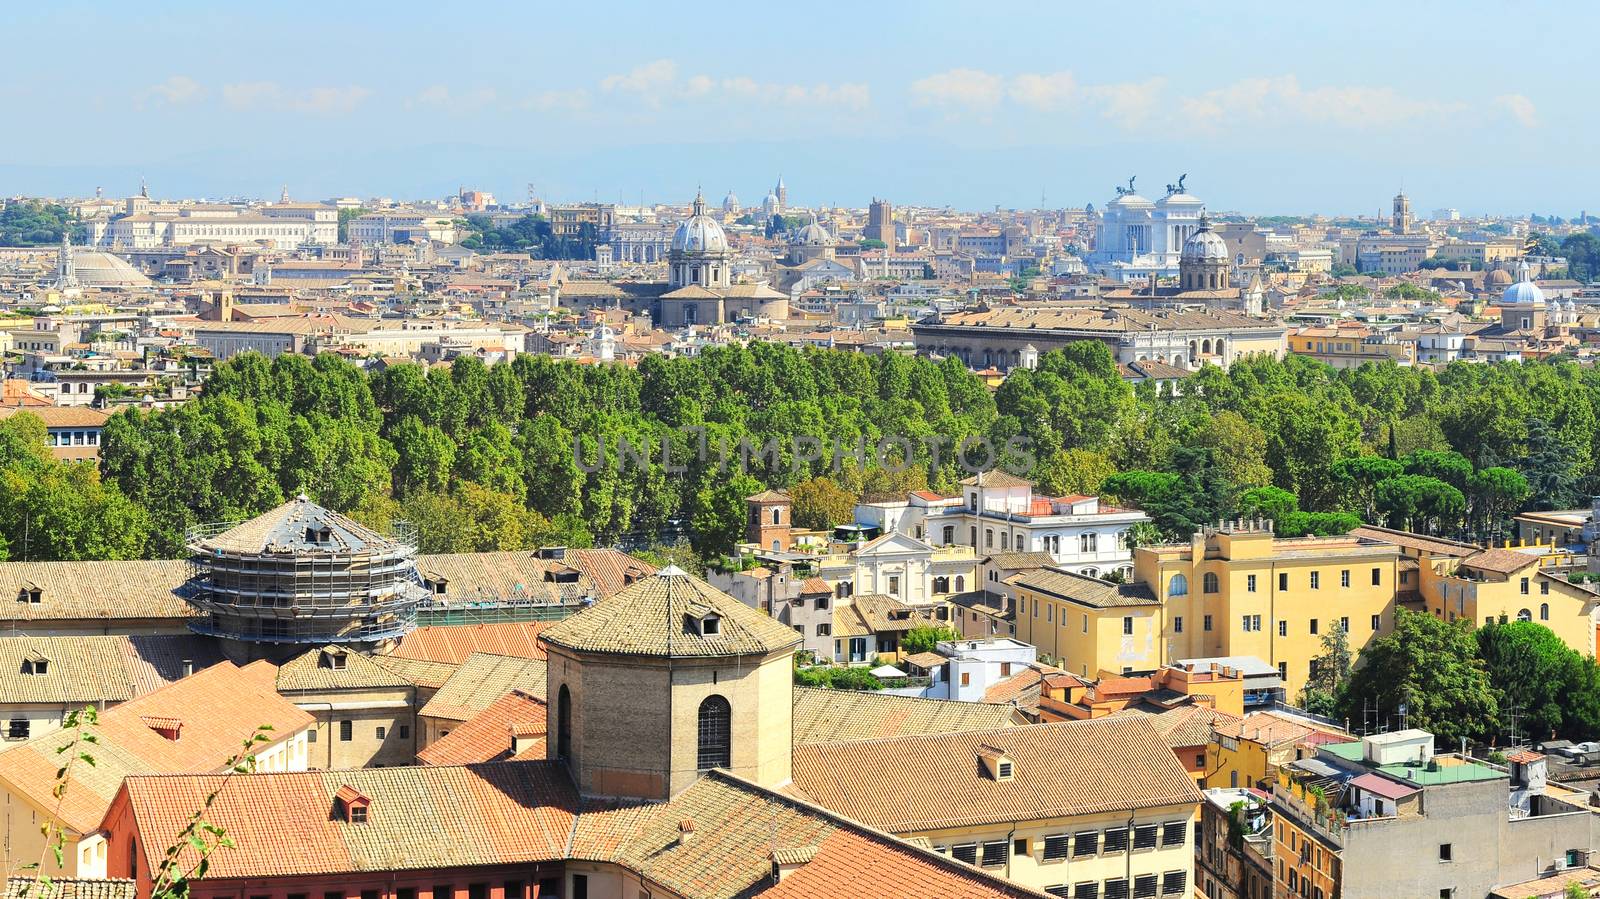 Skyline of Rome by joyfull